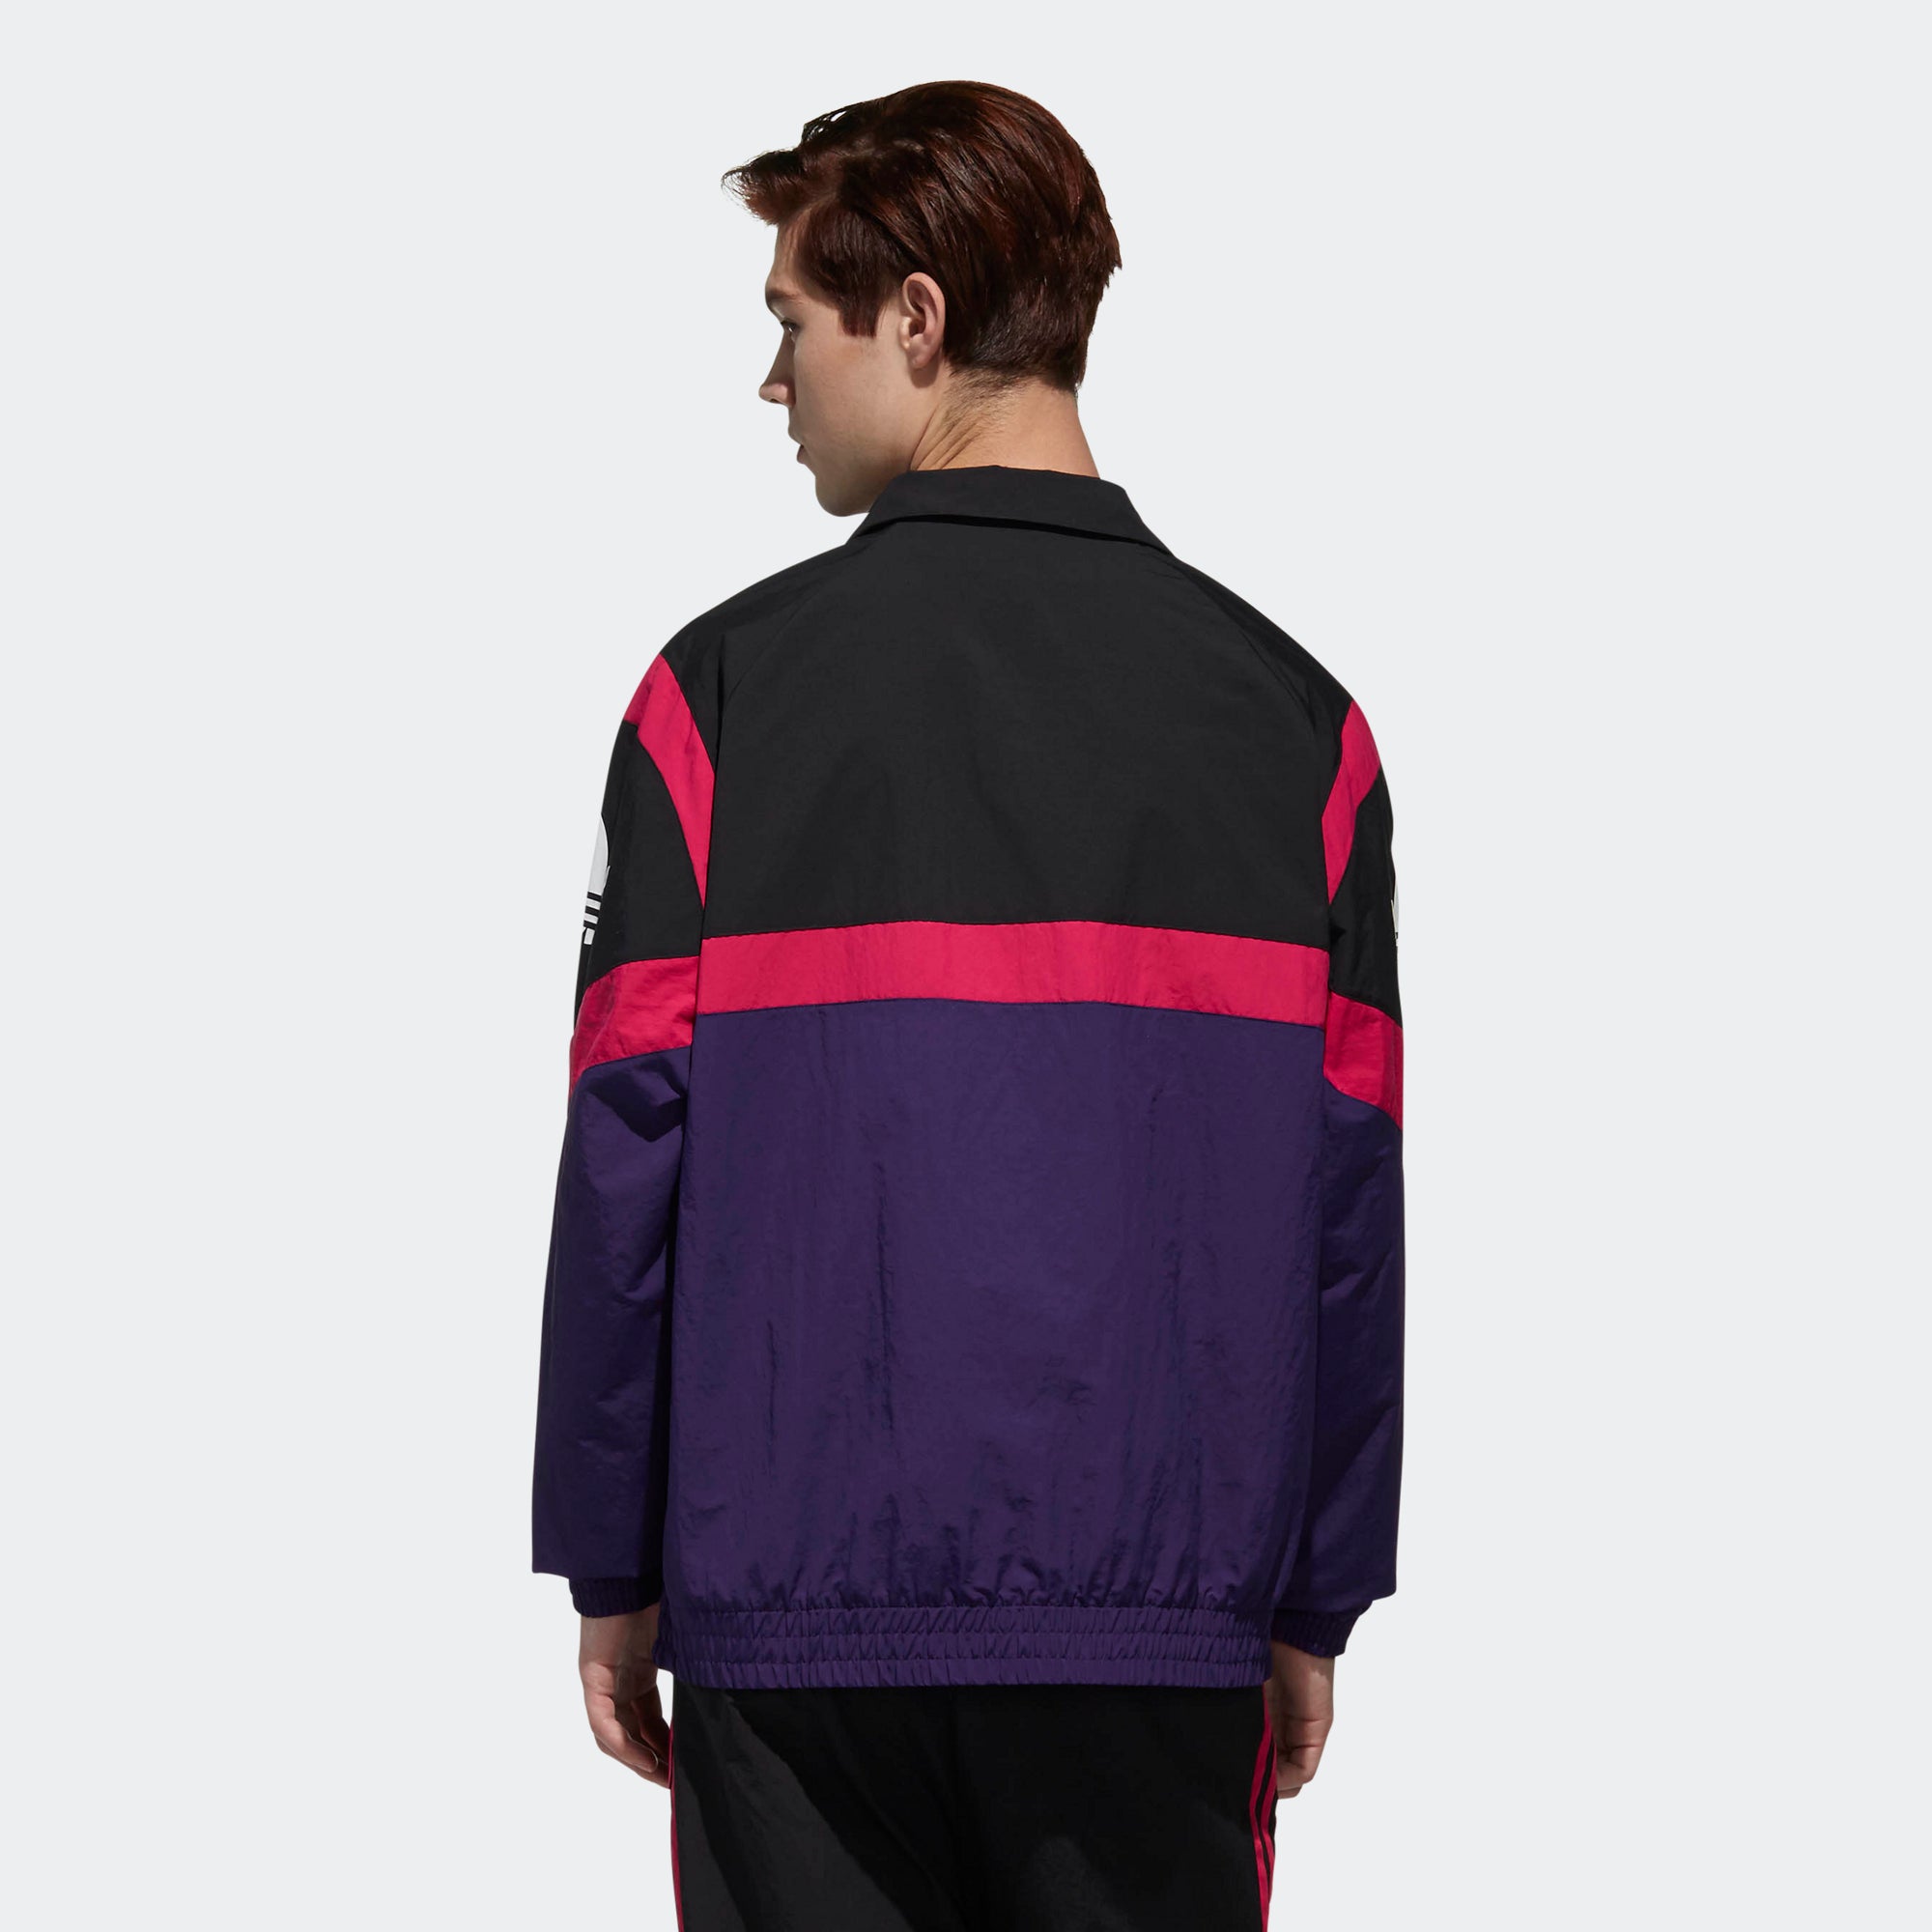 adidas sportive track jacket purple